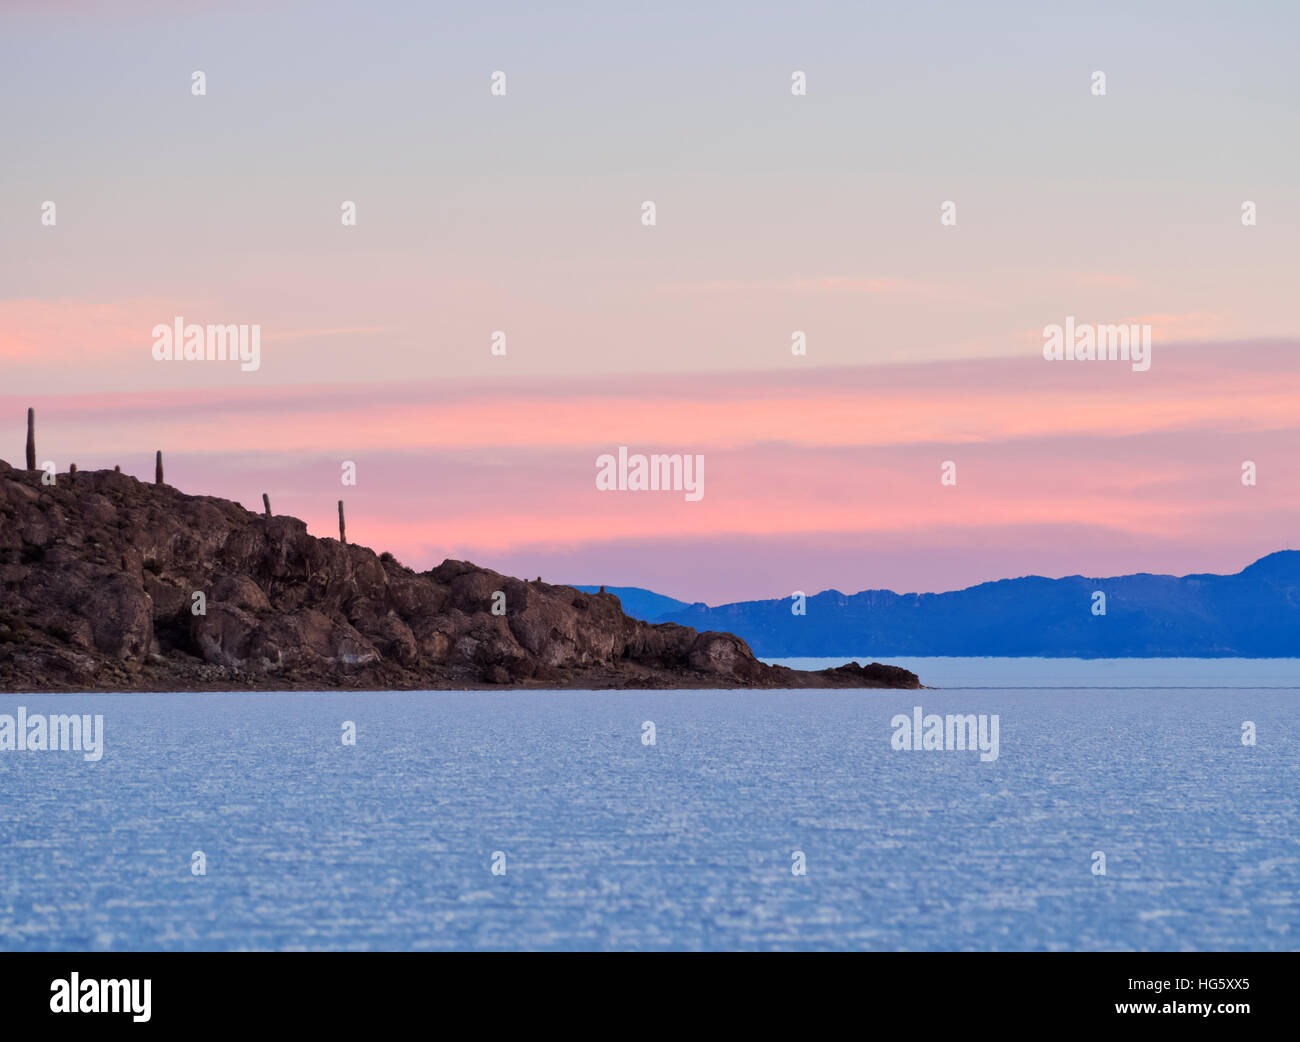 Bolivia, Potosi Department, Daniel Campos Province, Salar de Uyuni, View towards the Incahuasi Island at sunrise. Stock Photo